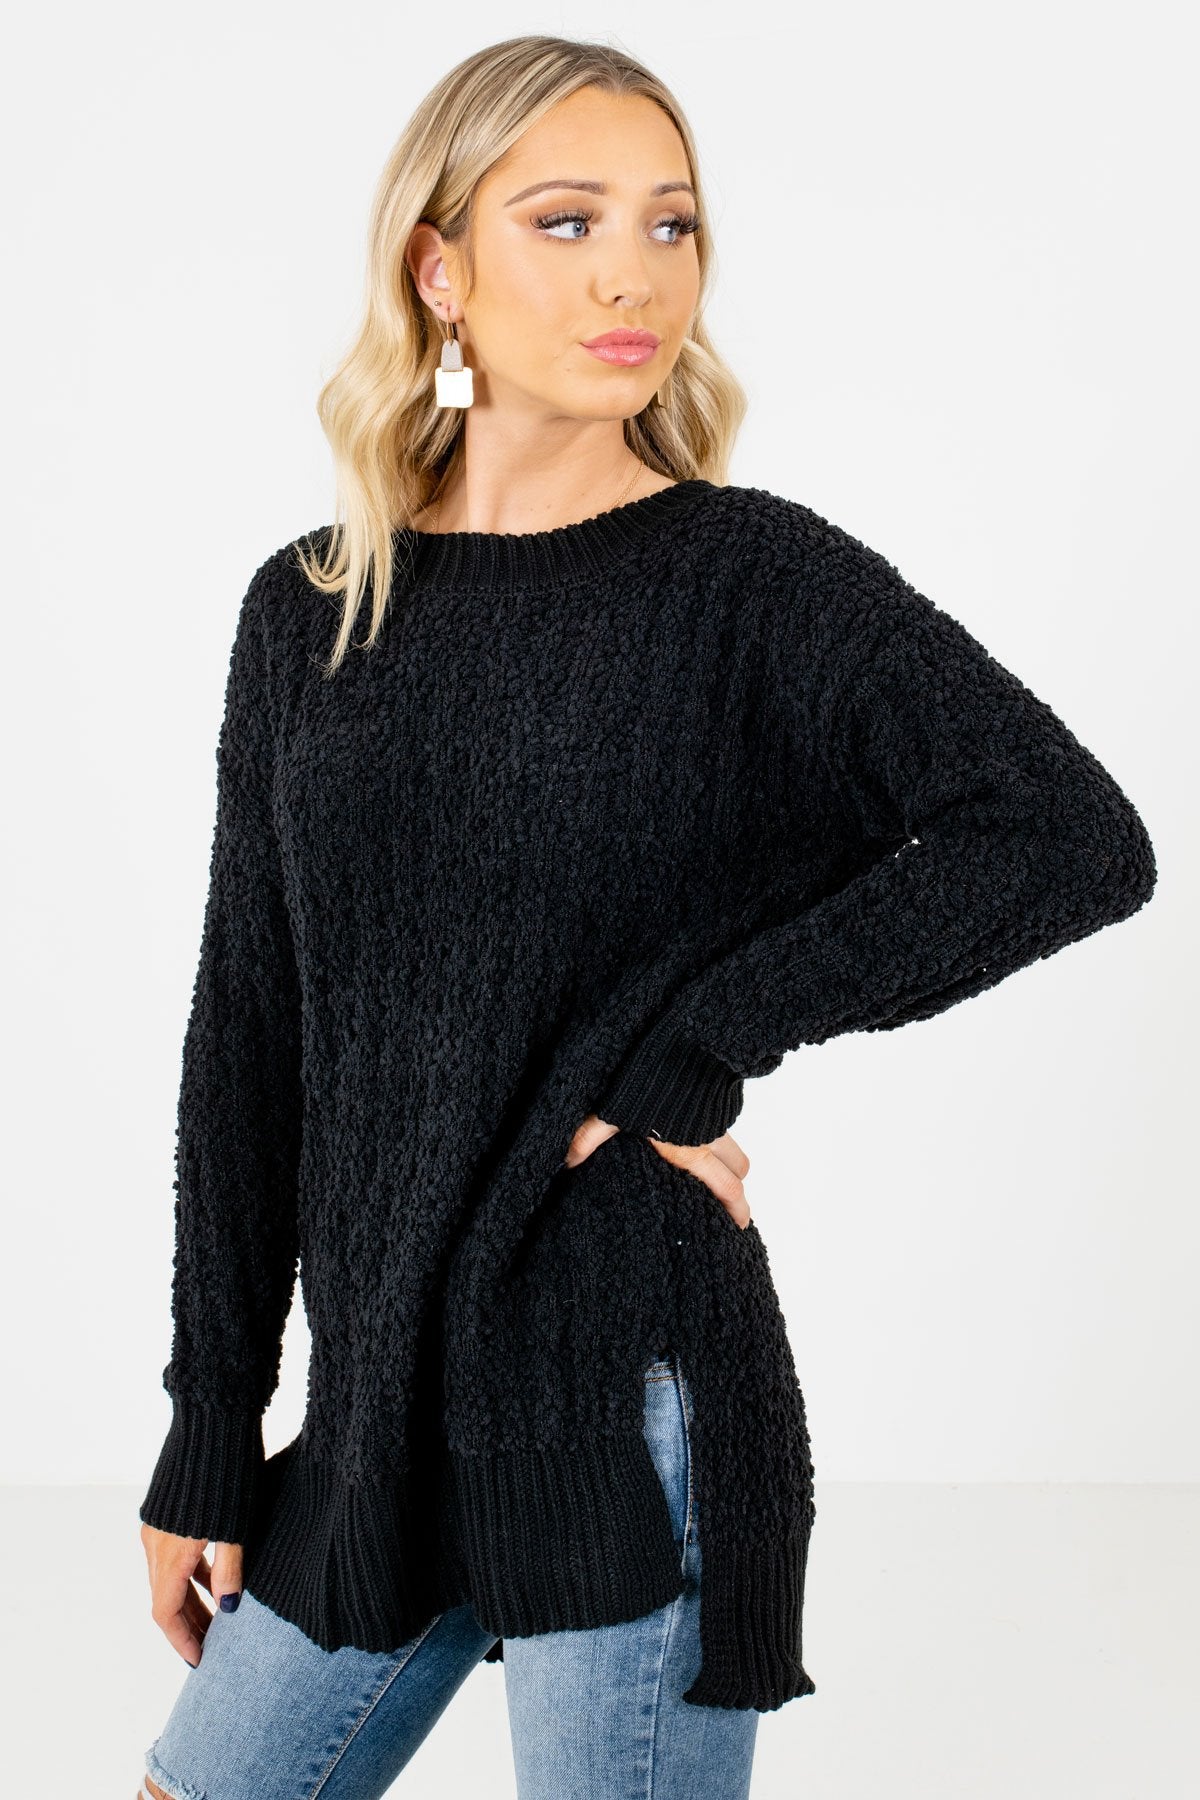 Black Round Neckline Boutique Sweaters for Women